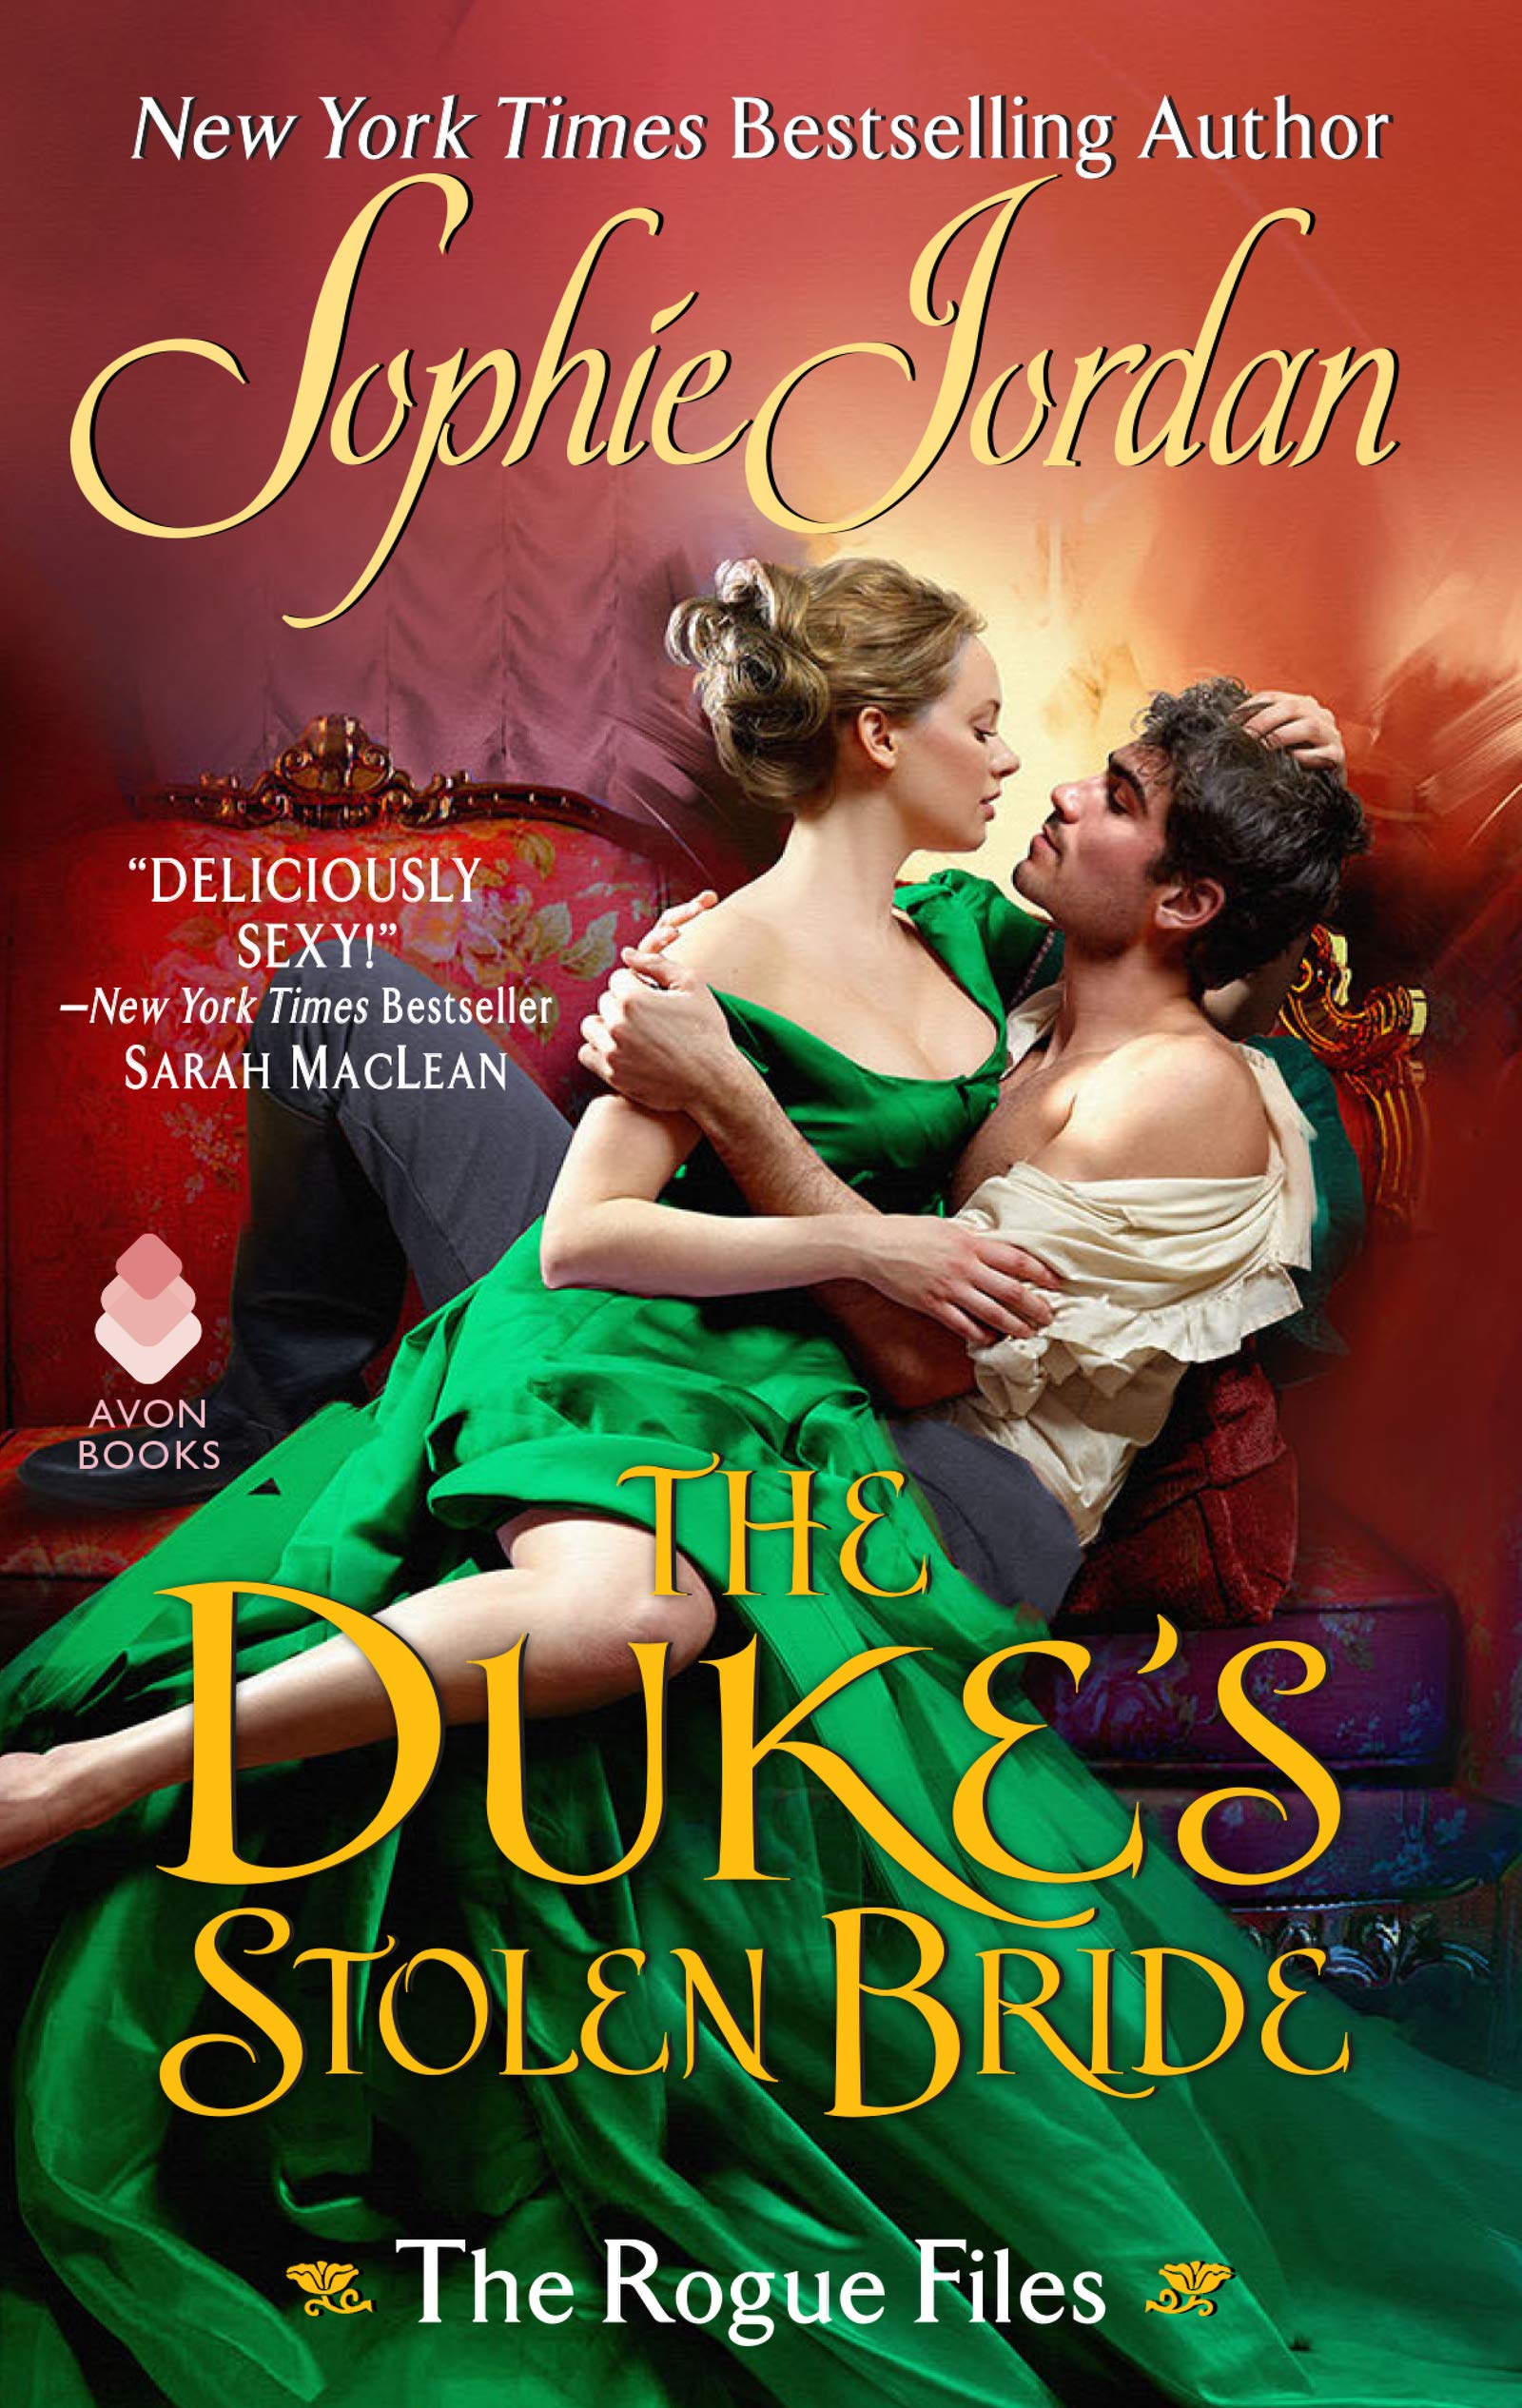 The Duke's Stolen Bride: The Rogue Files